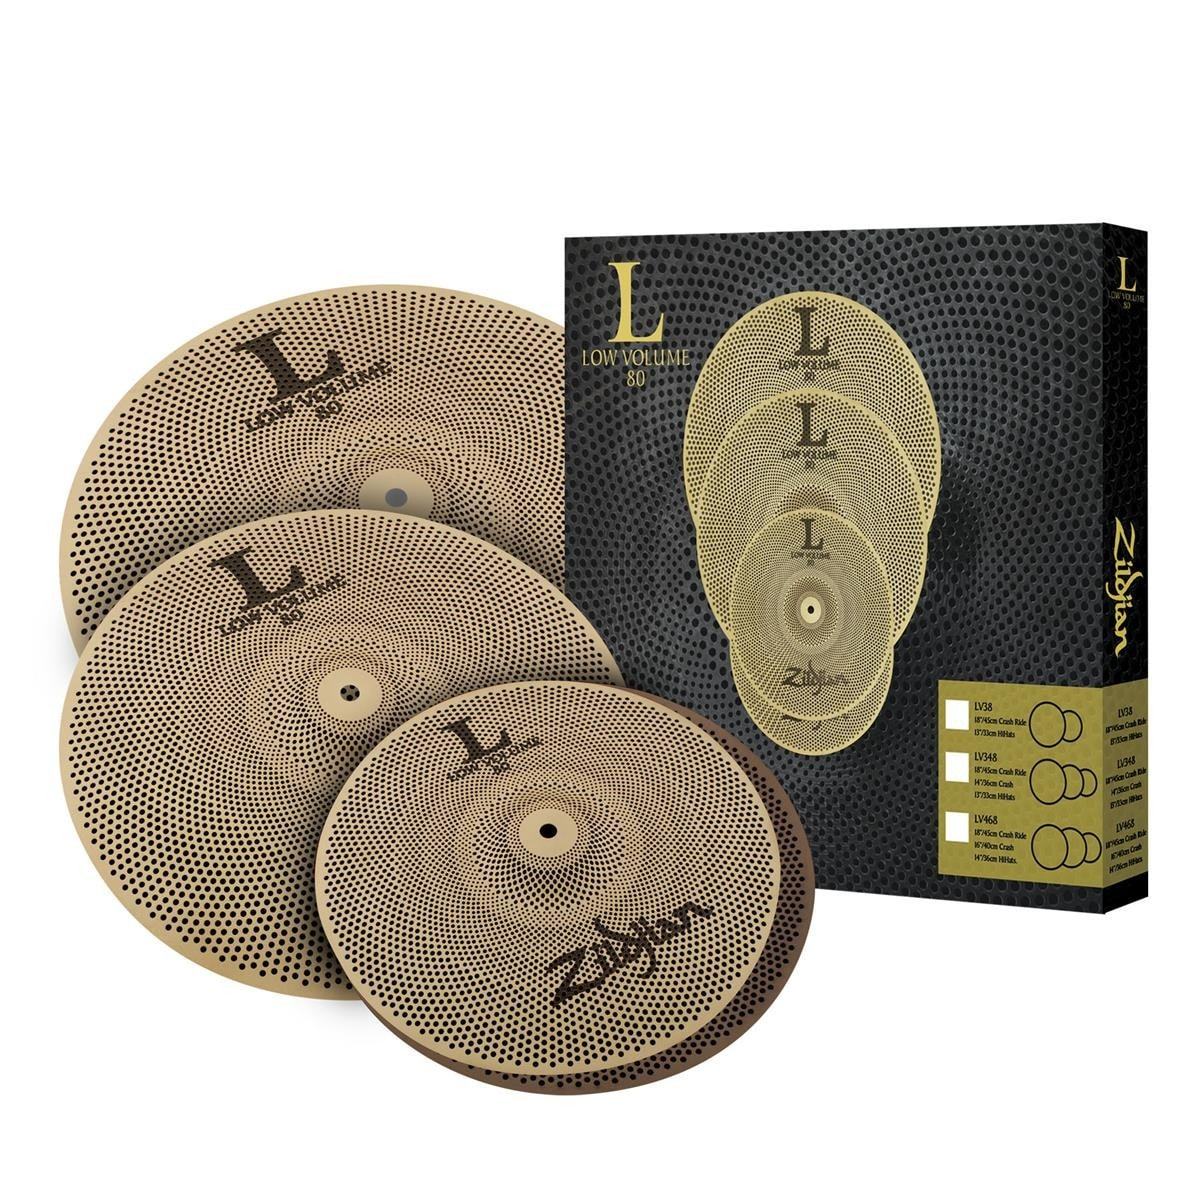 Zildjian LV468 Low Volume Cymbals Box Set